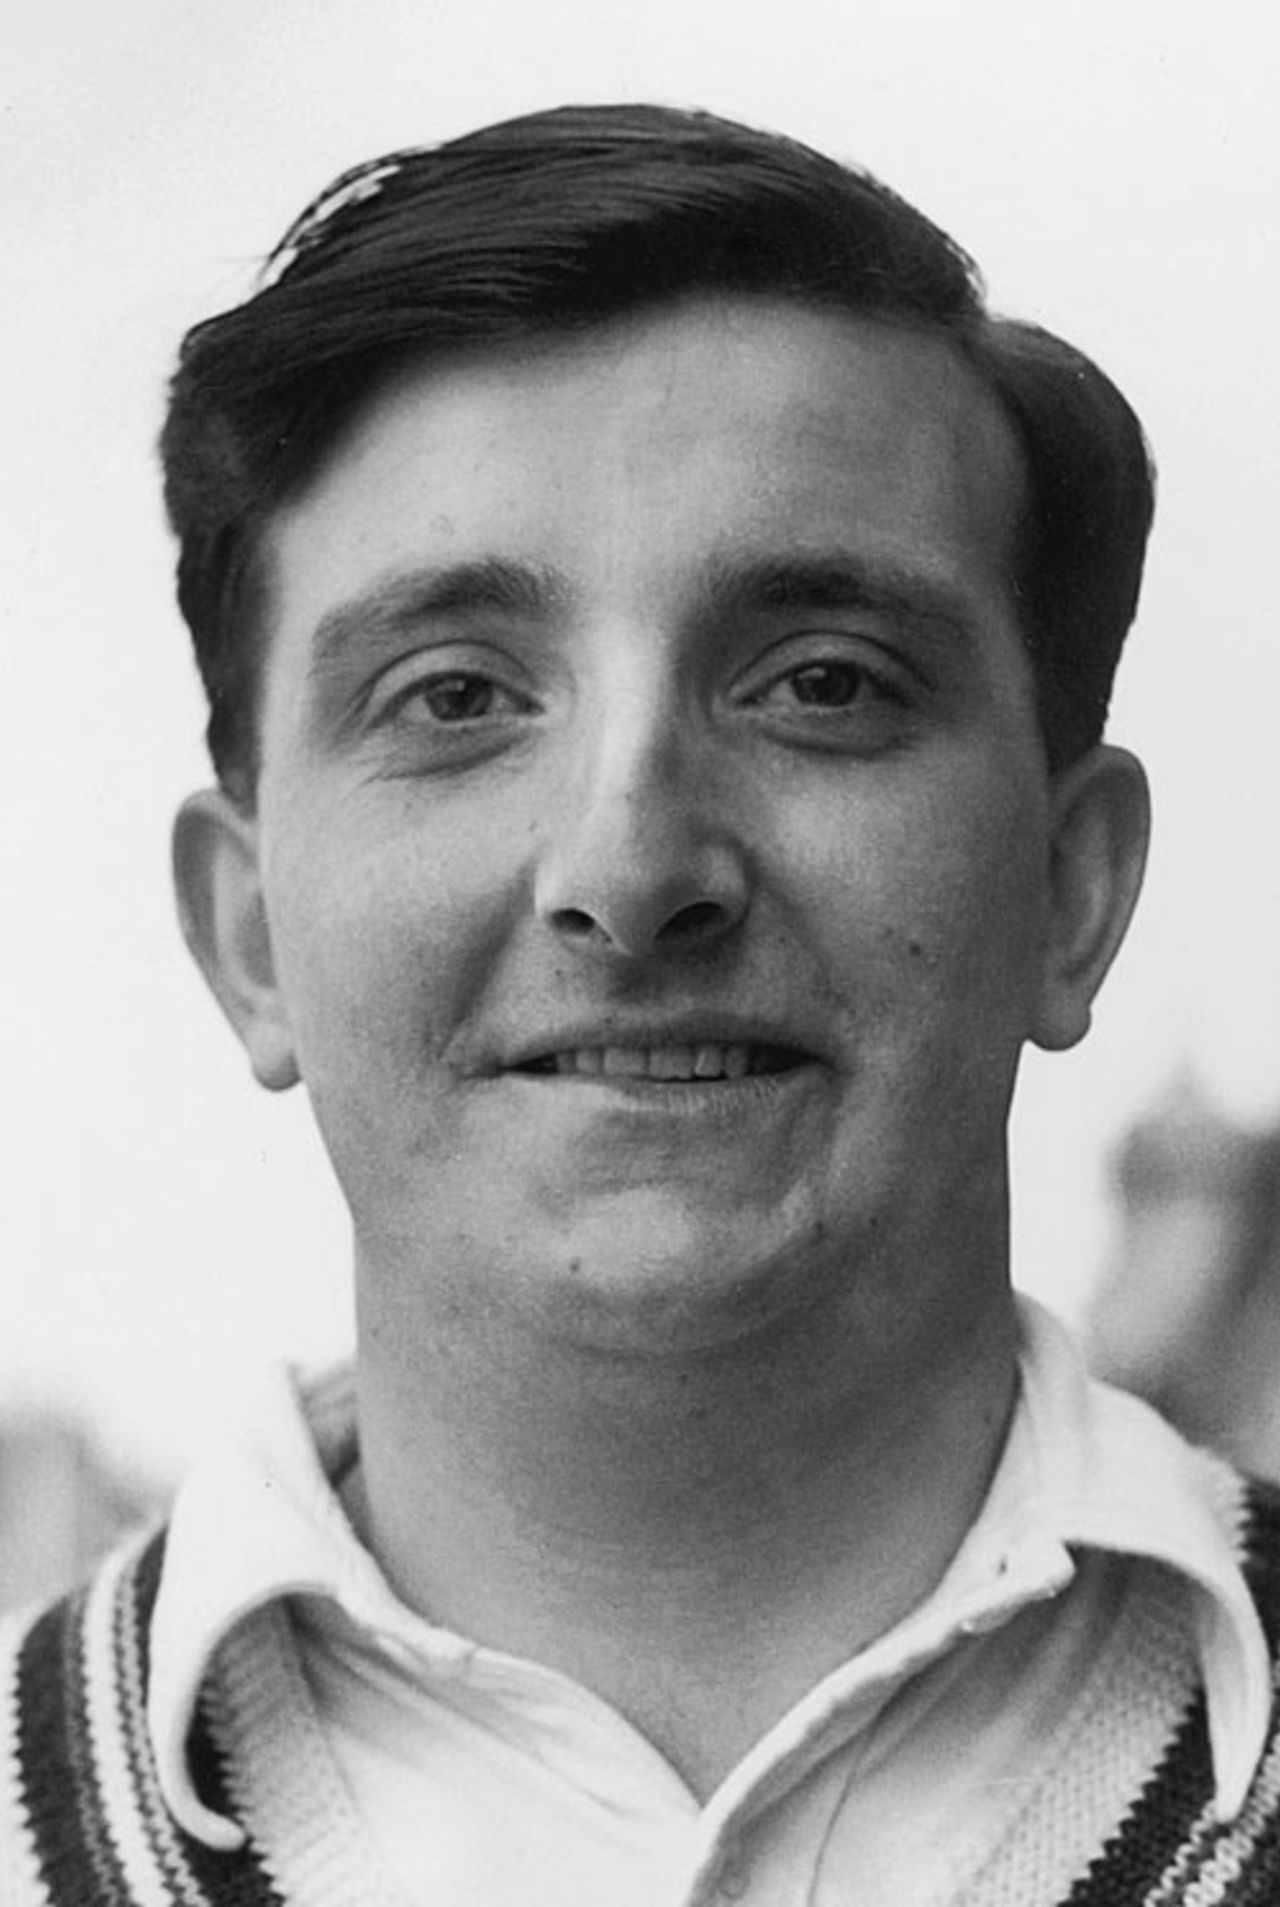 Portrait of Bryan "Bomber" Wells, 1955